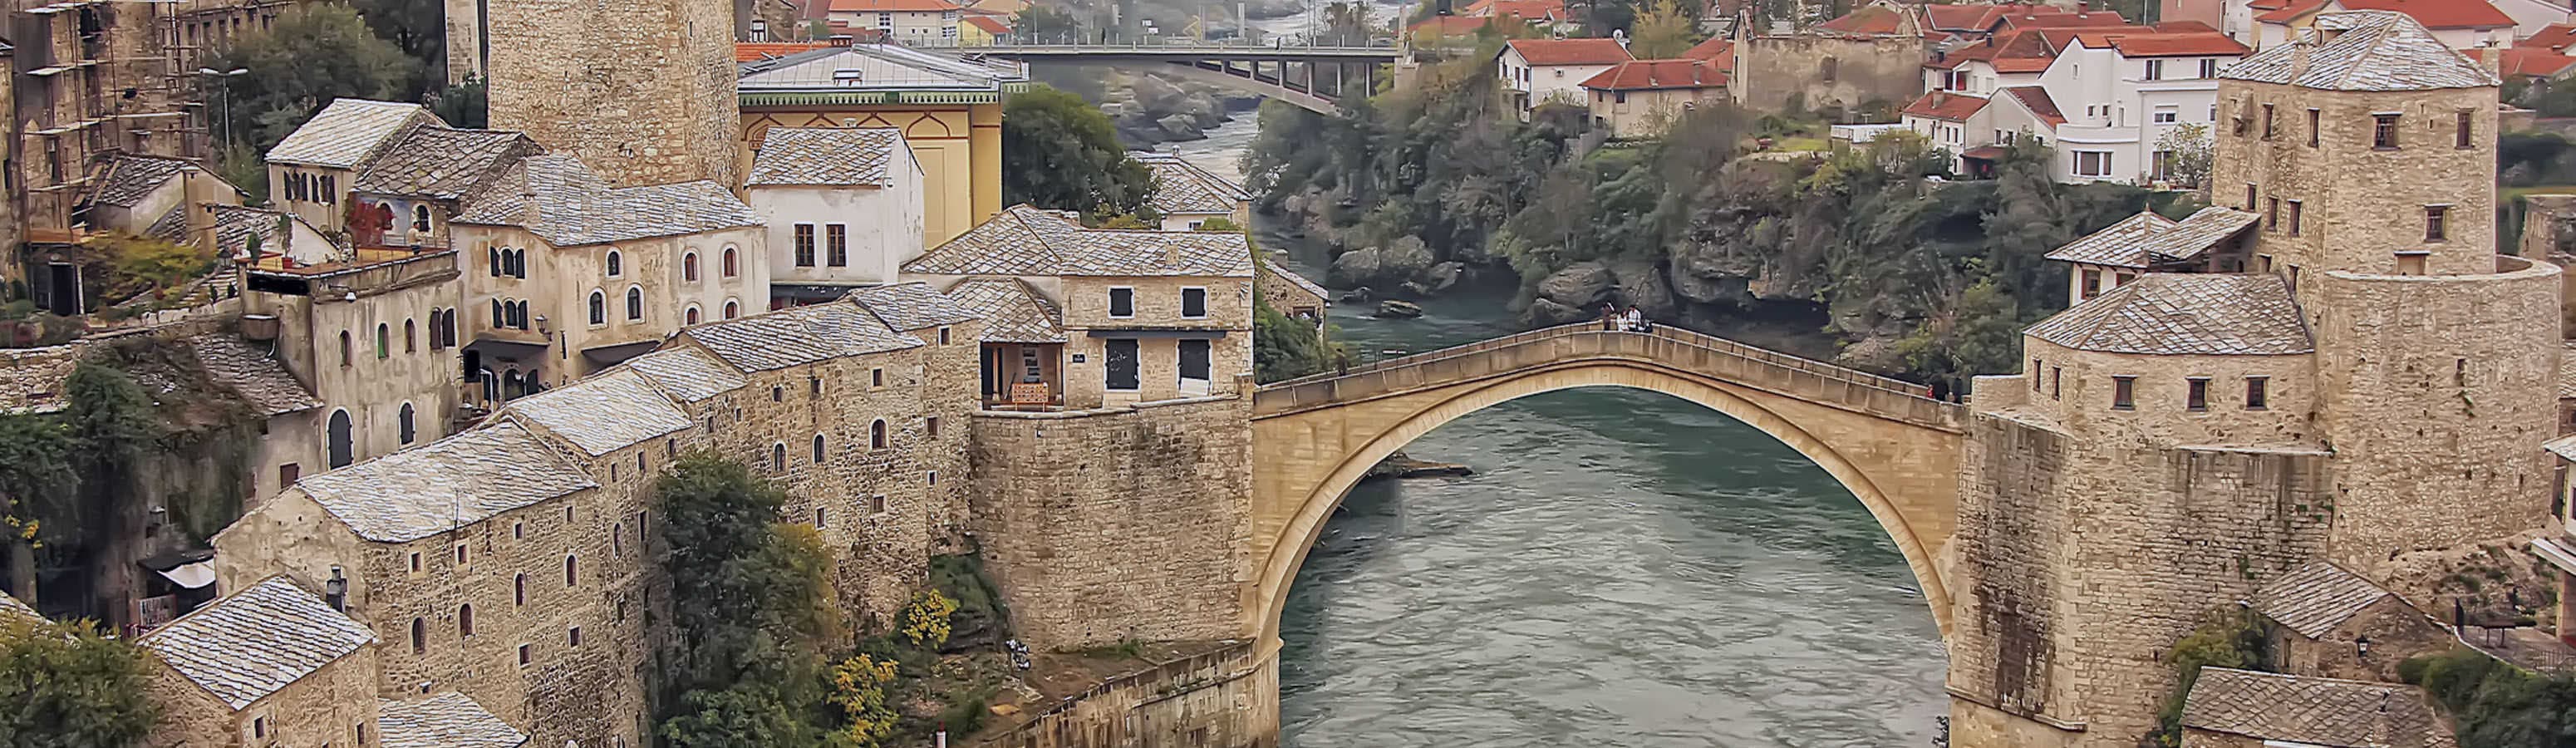 Mostar - bewitching Balkan Orient